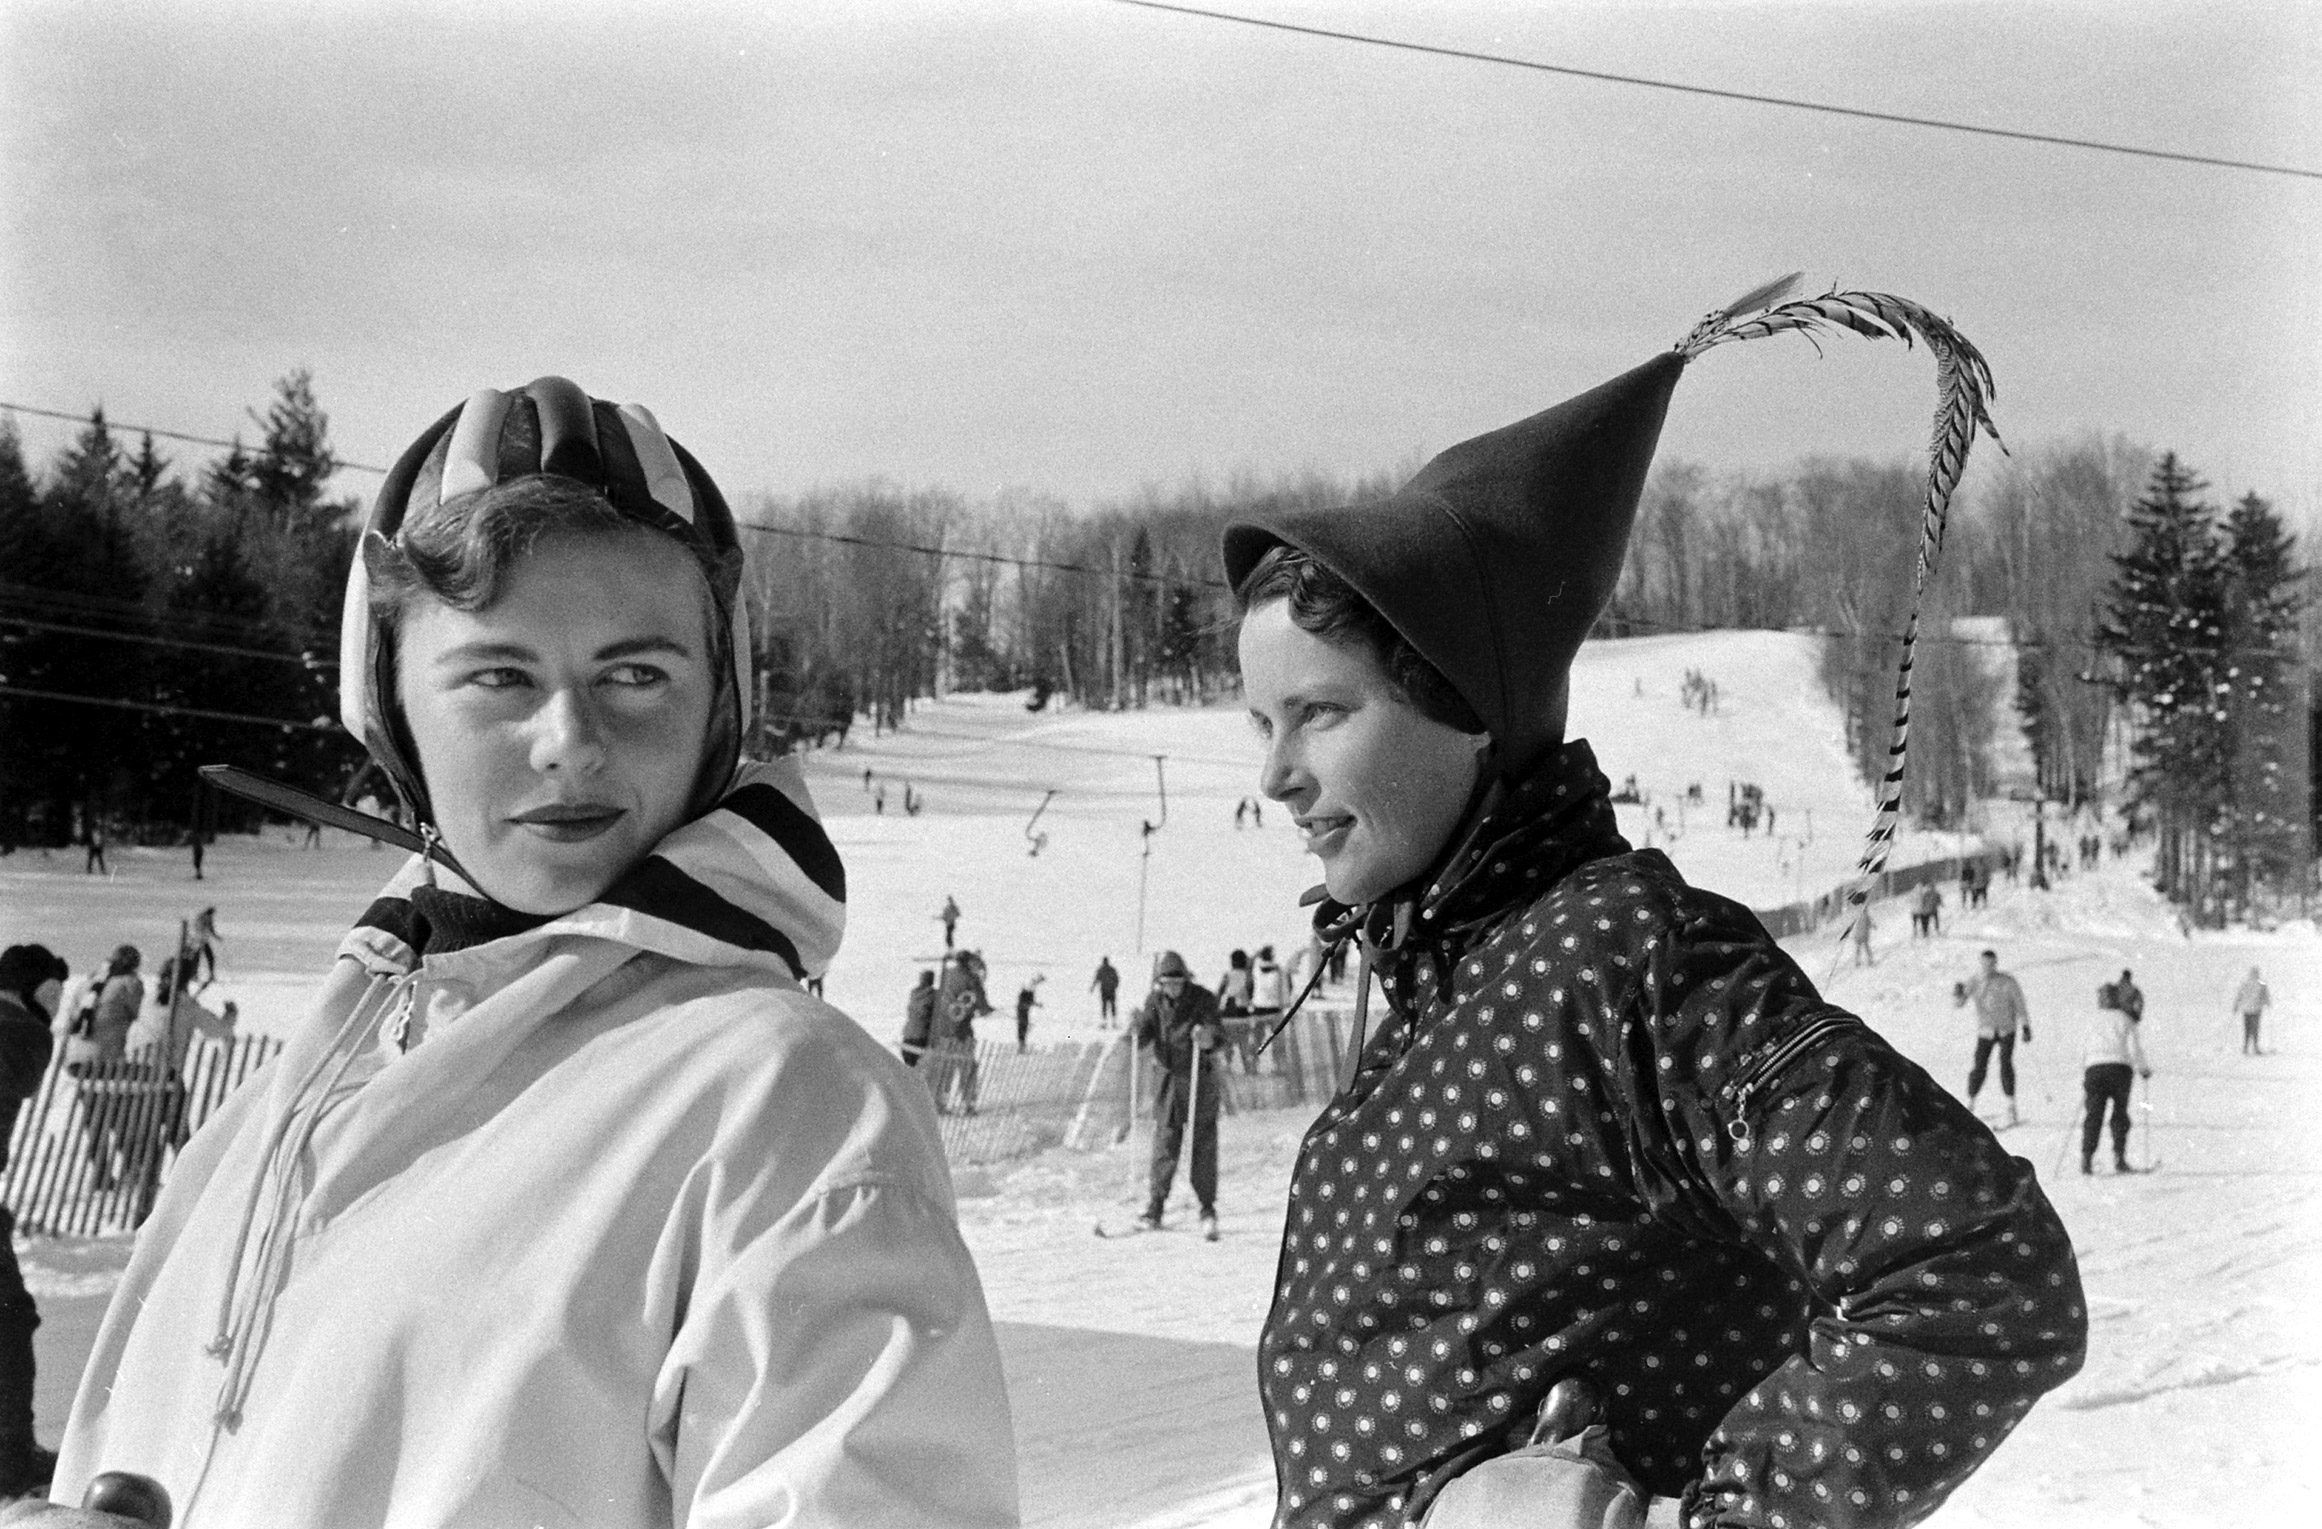 Fashion on the ski slopes at Mt. Snow, Vermont, 1957.